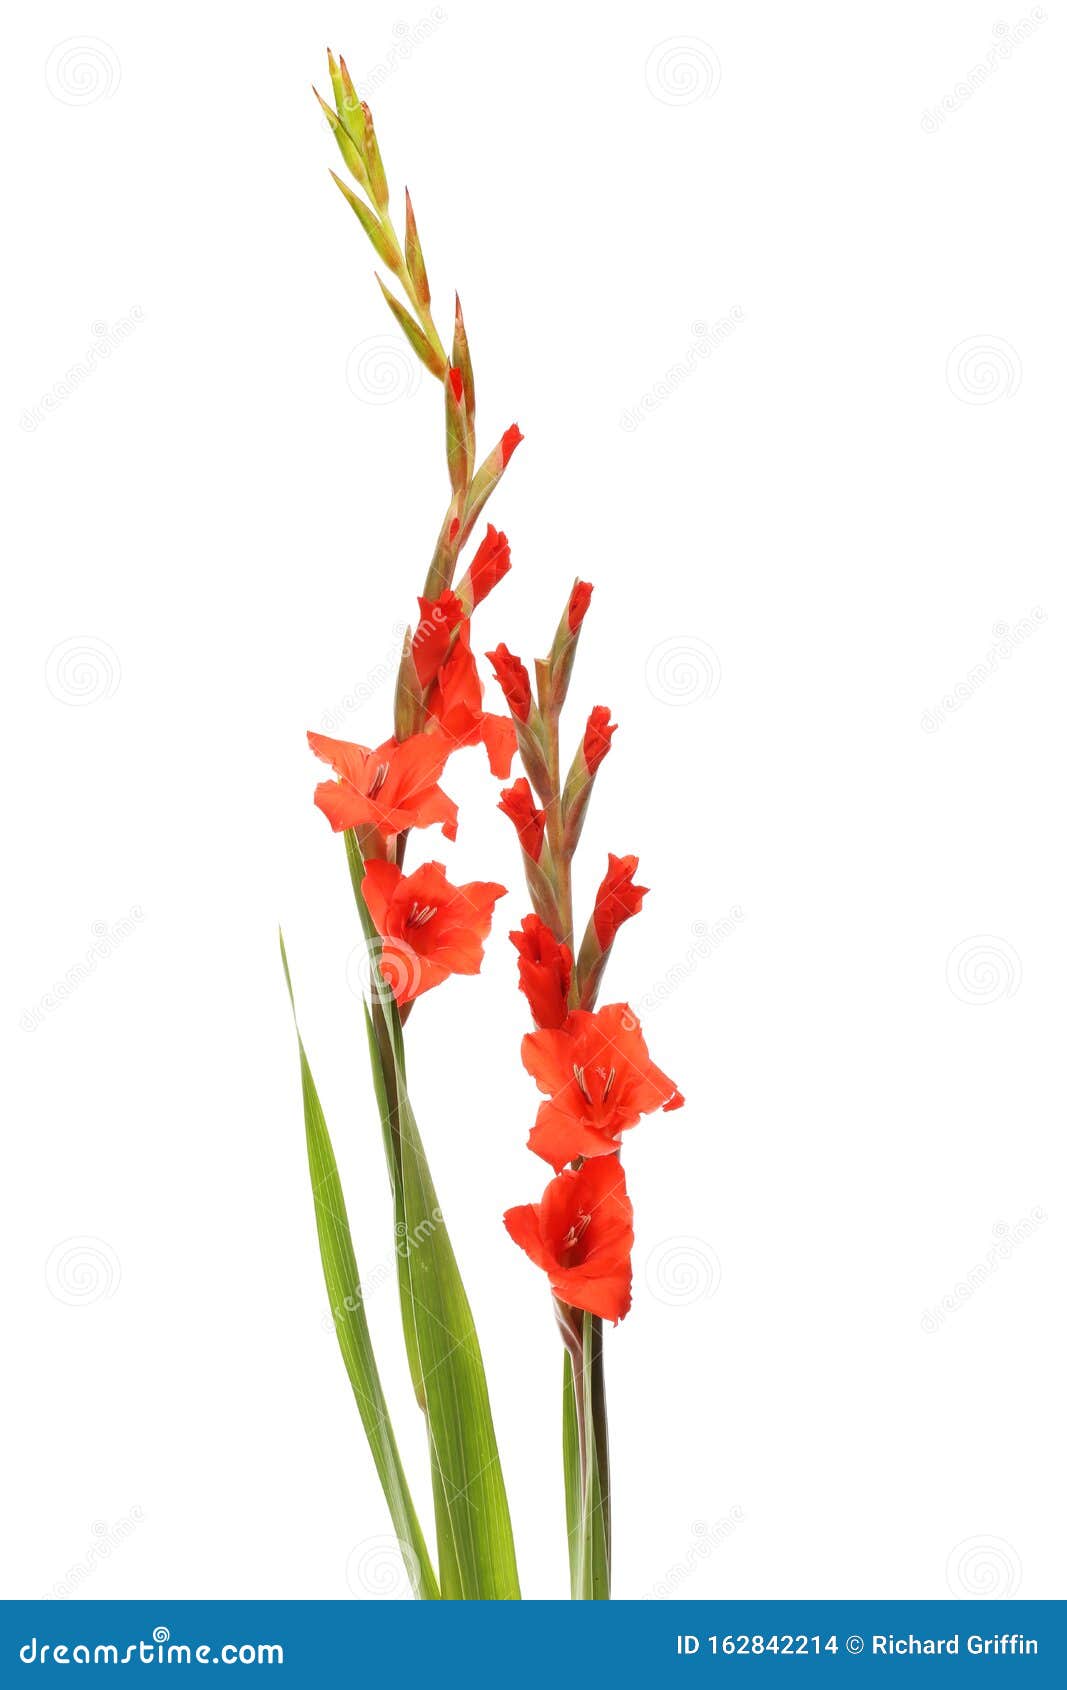 red gladioli flowers